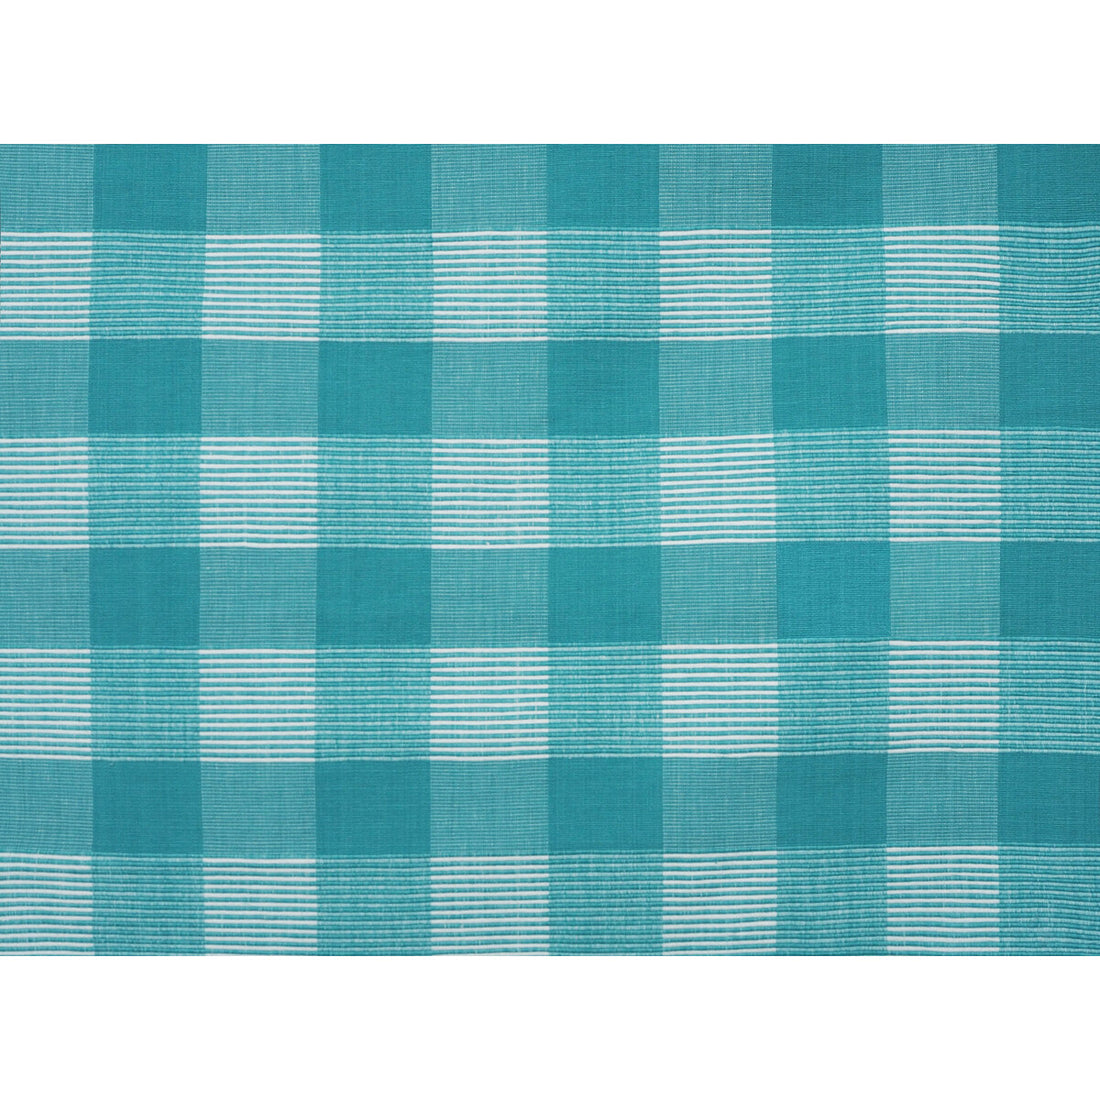 Siam Sq Cotton fabric in aqua pura color - pattern JAG-50061.131.0 - by Brunschwig &amp; Fils in the Festival collection